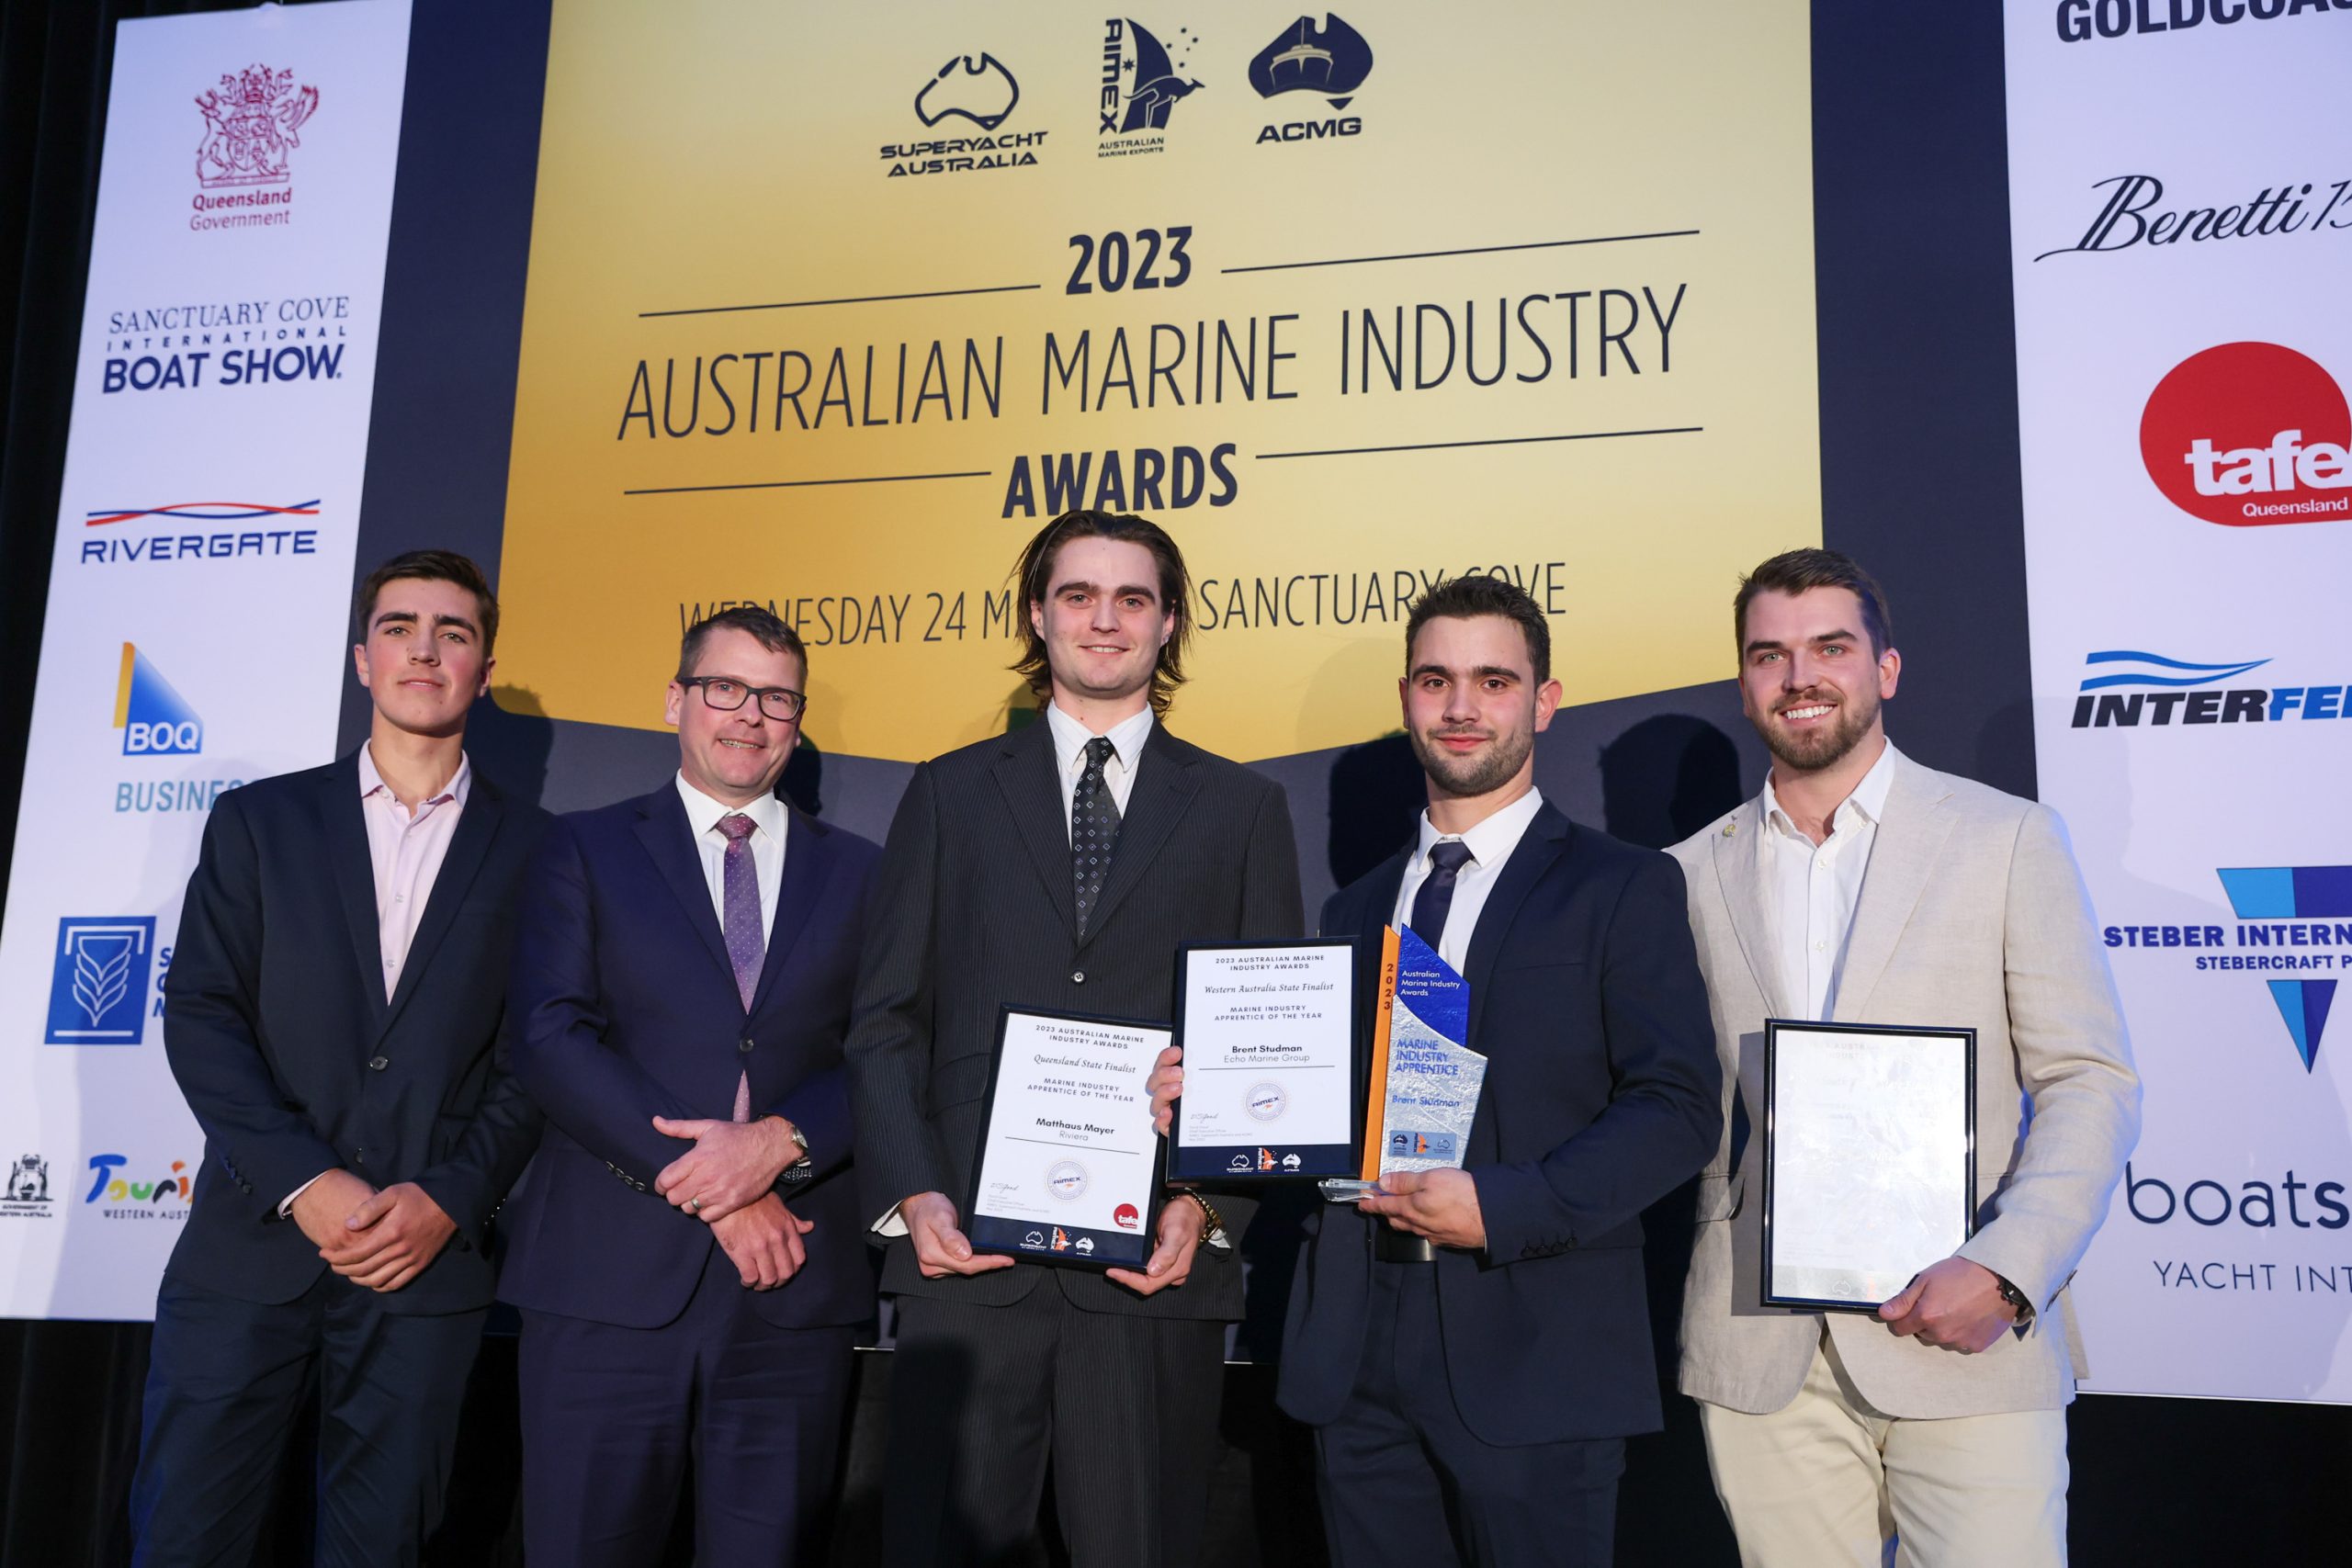 Australian Marine Industry Awards 2023